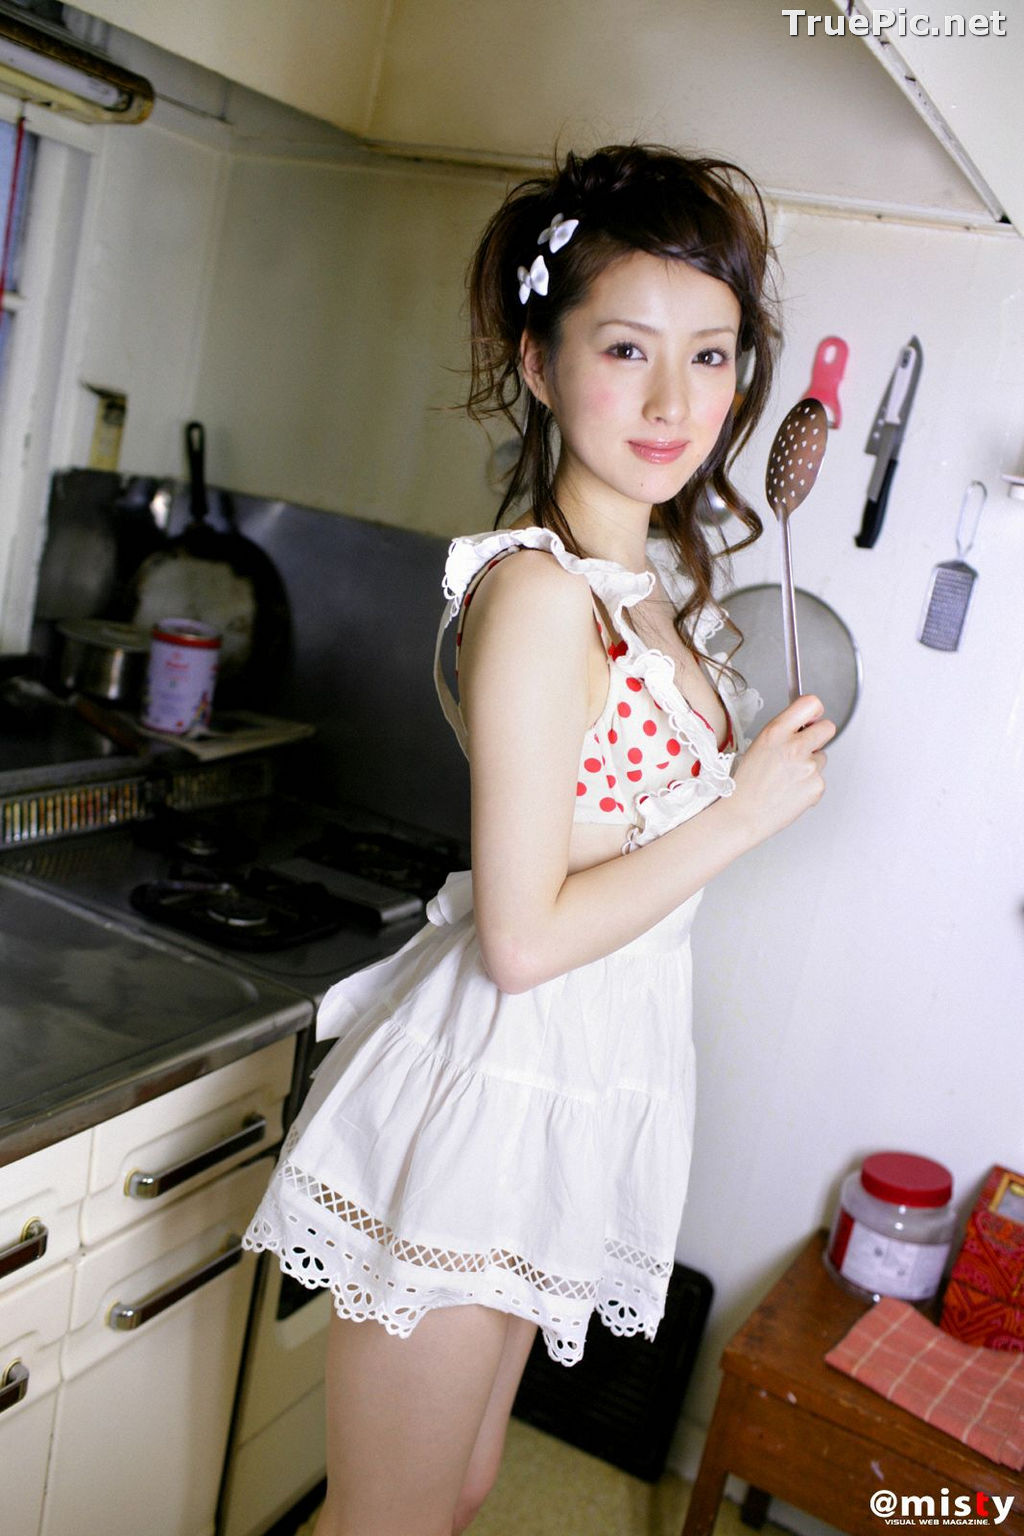 Image Misty No.217 - Japanese Actress and Gravure Idol - Saki Seto - TruePic.net - Picture-5